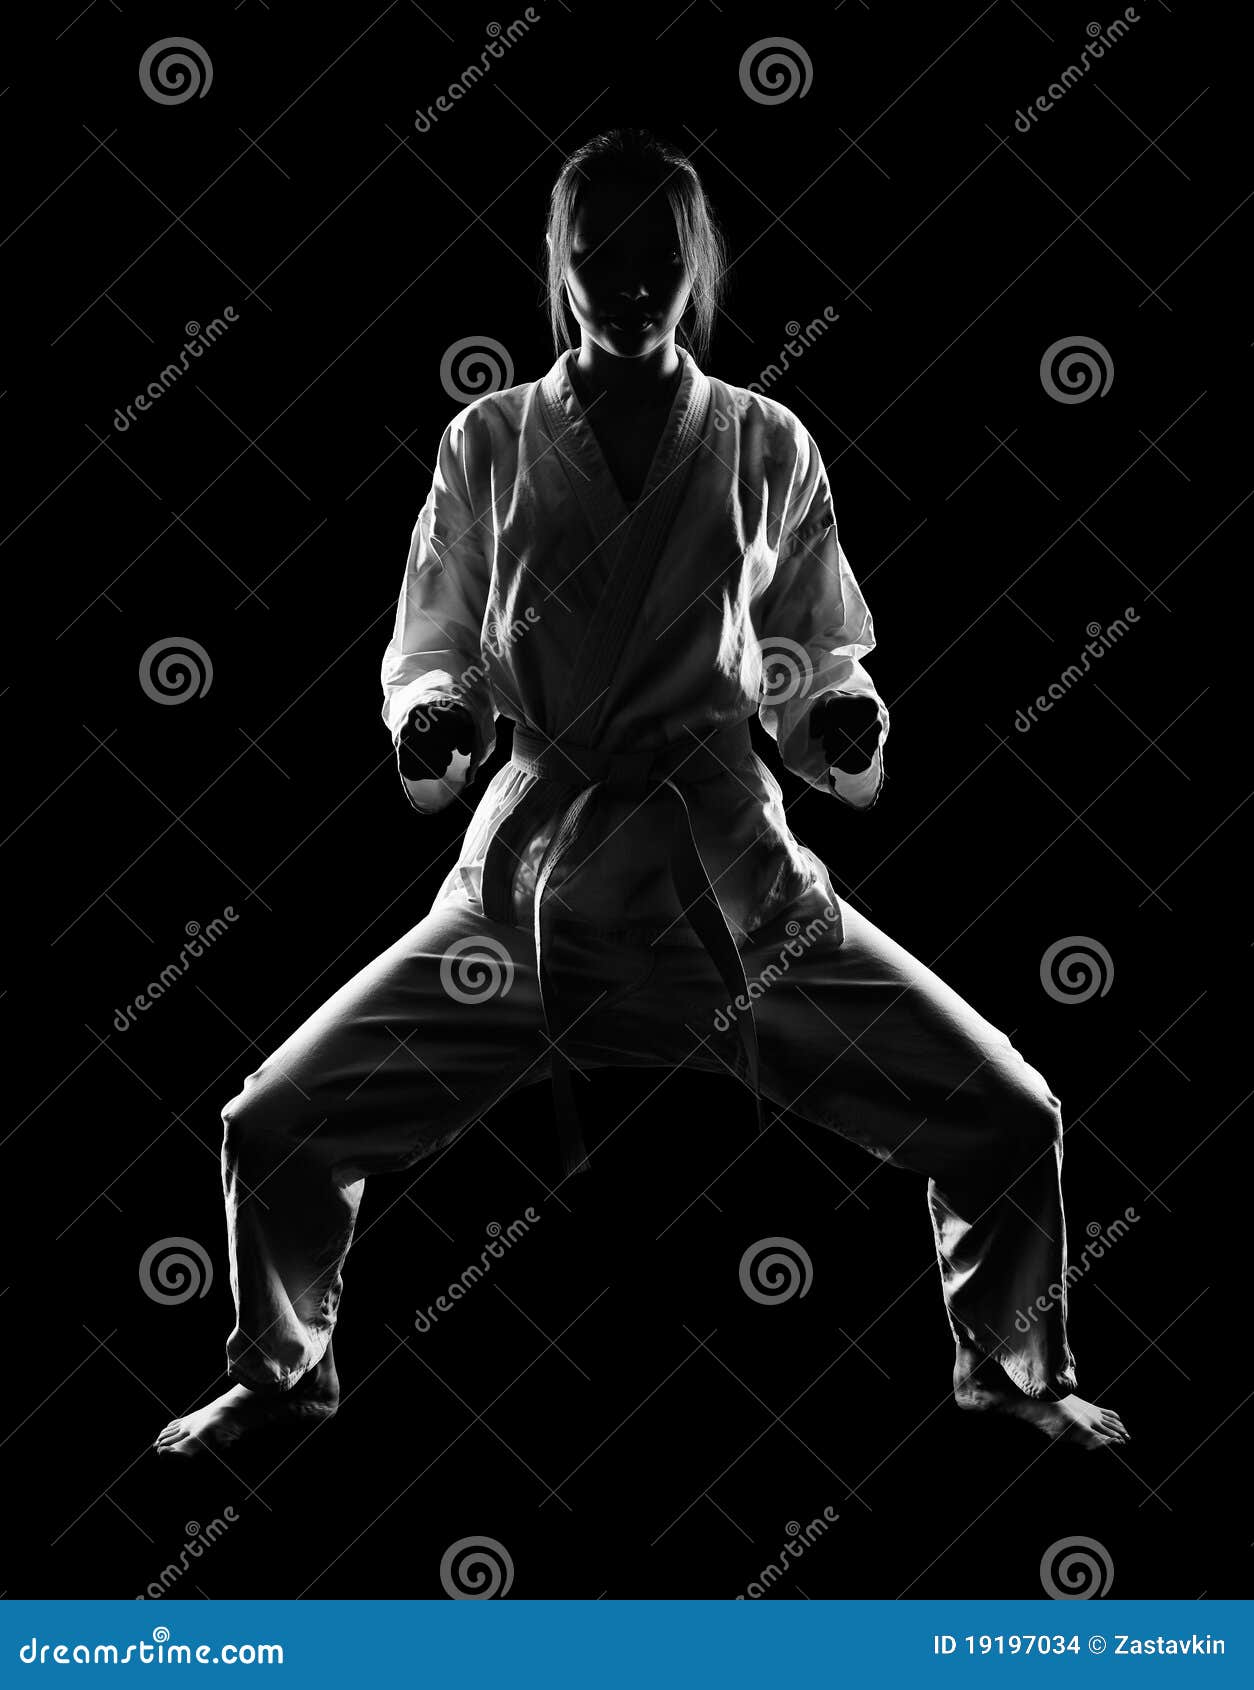 Karate Girl Stock Images - Image: 19197034